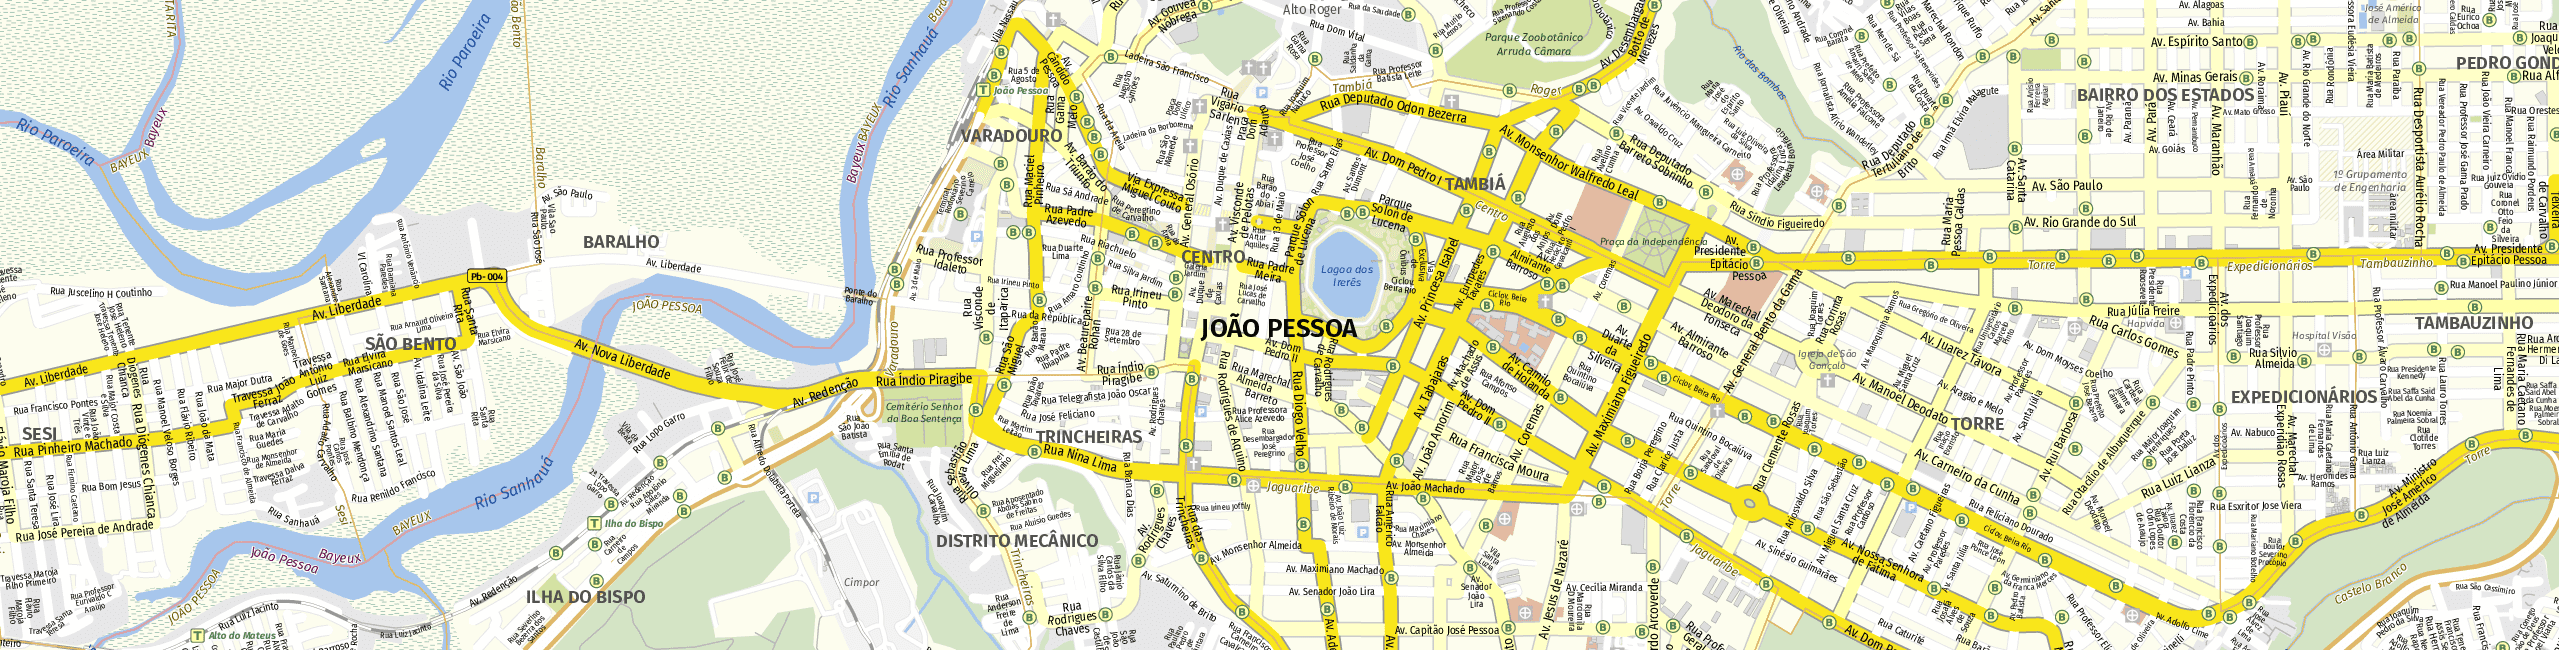 Stadtplan João Pessoa zum Downloaden.